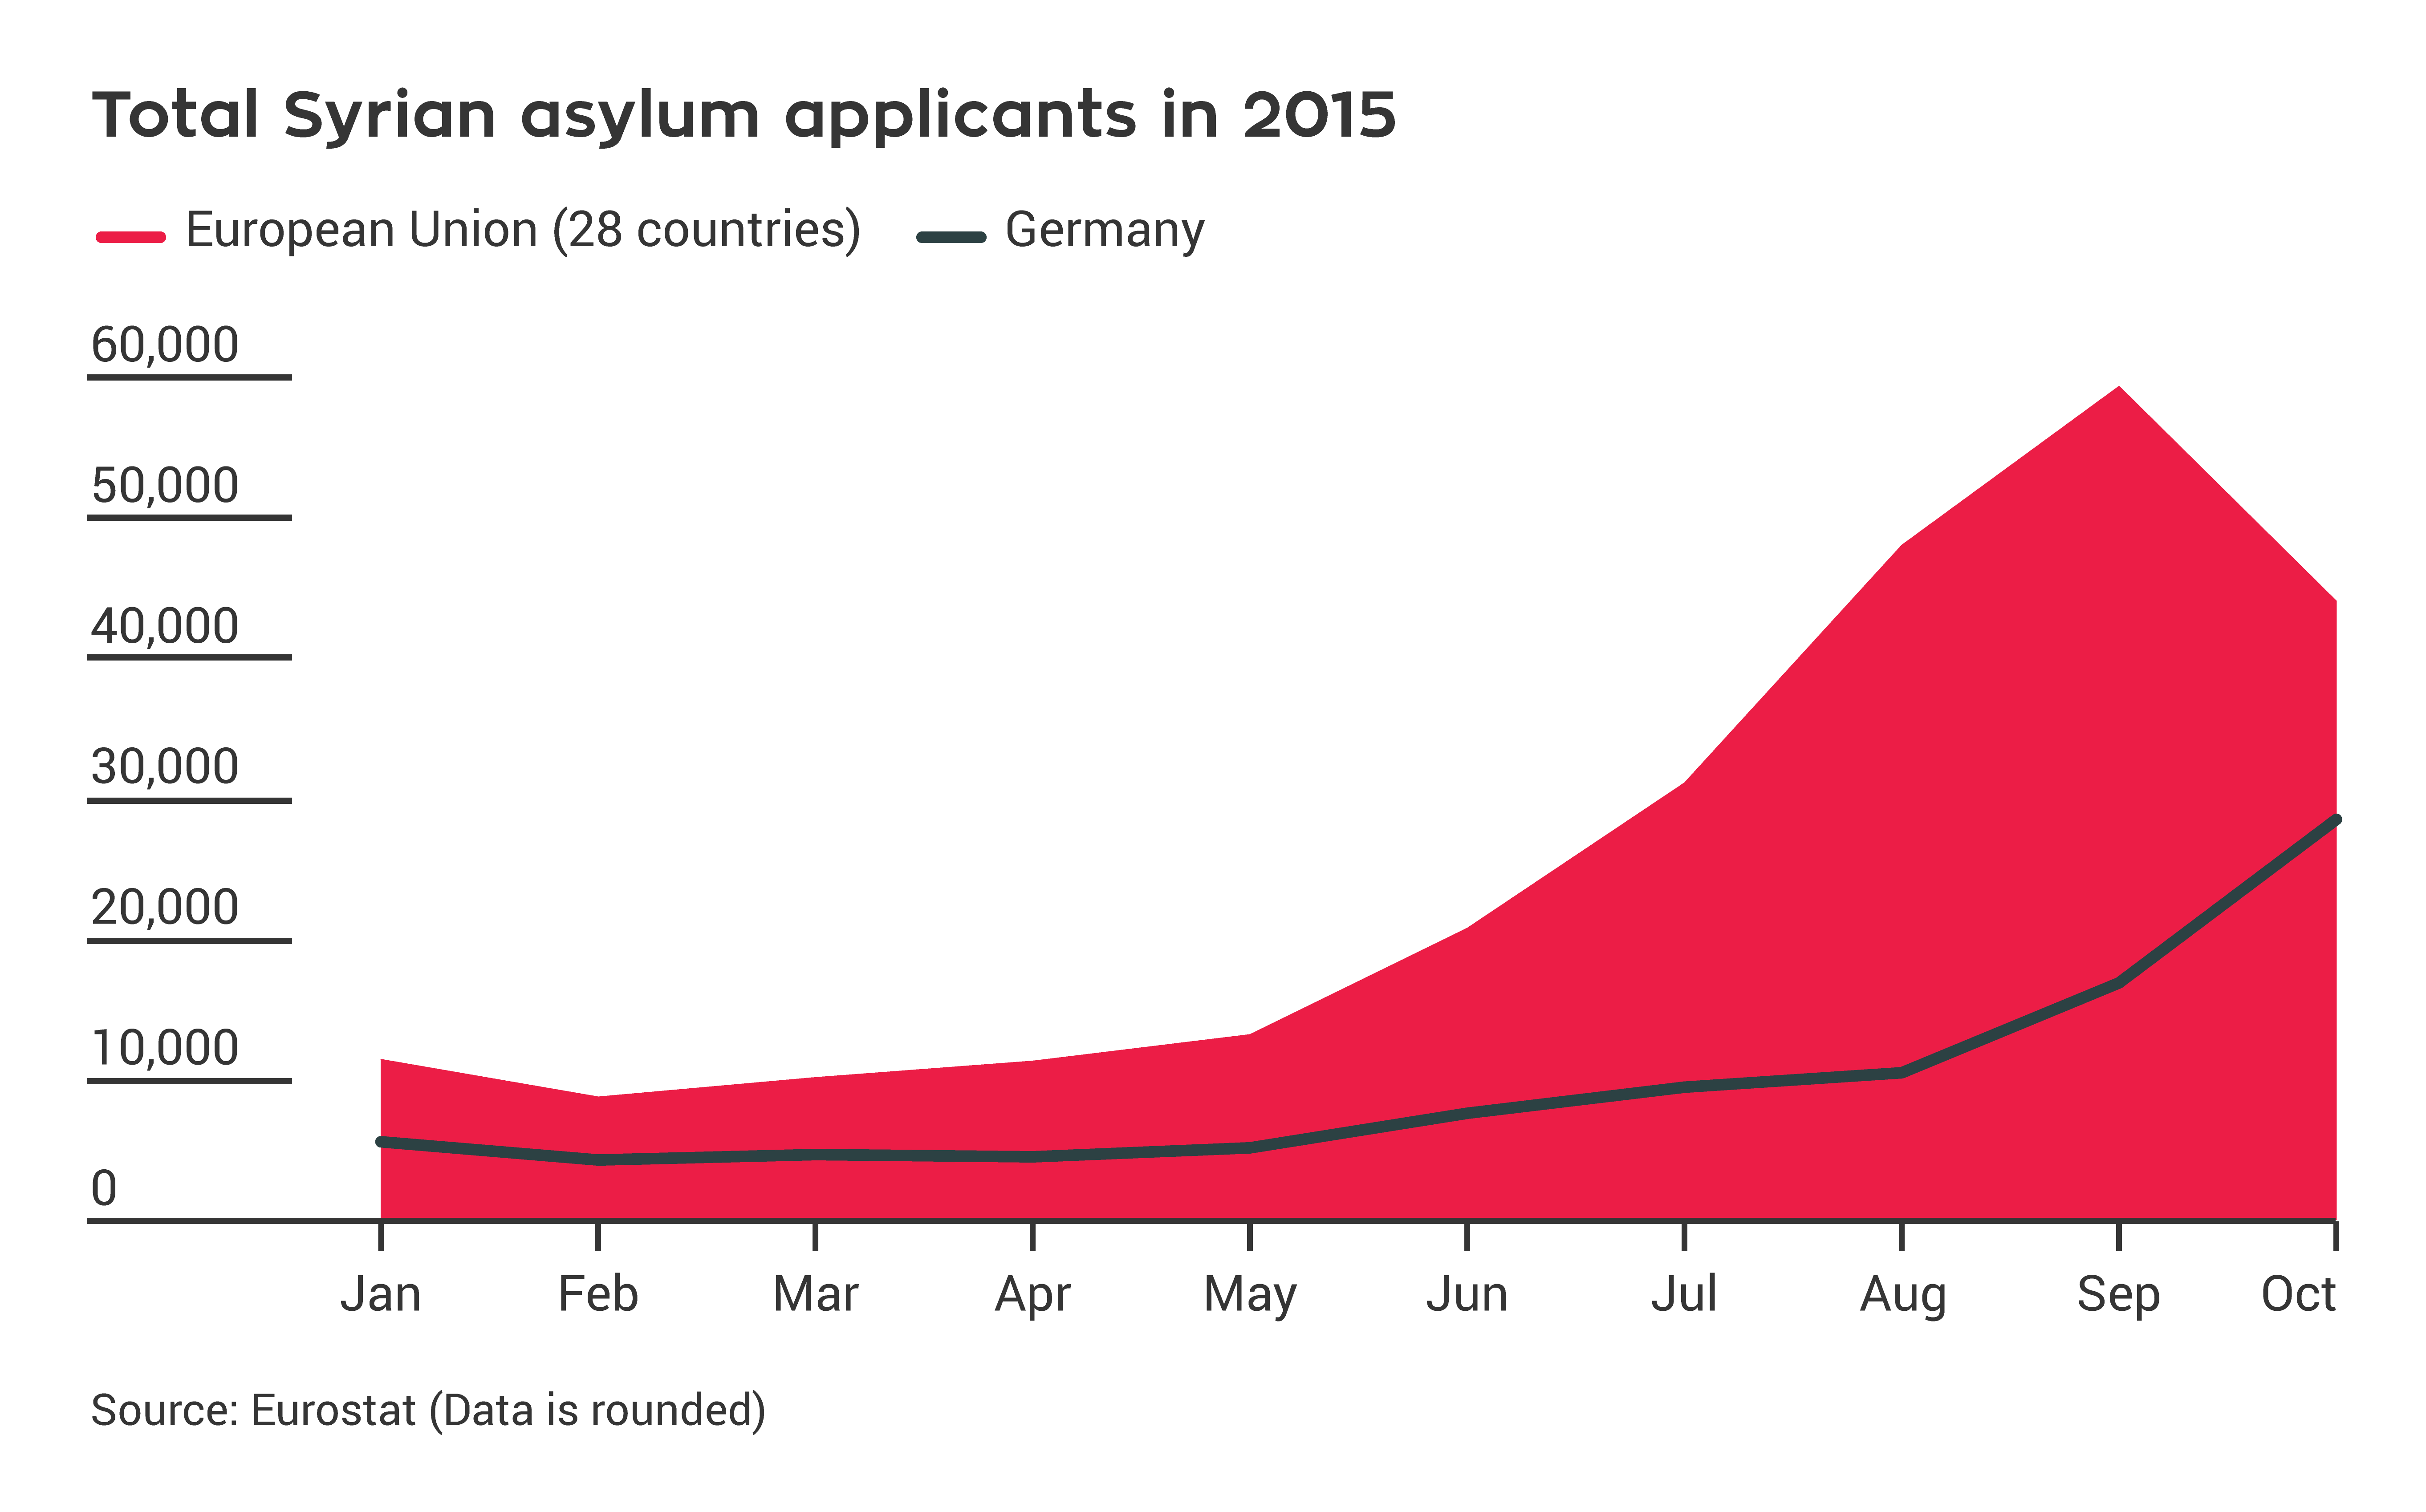 Total Syrian asylum applicants in 2015